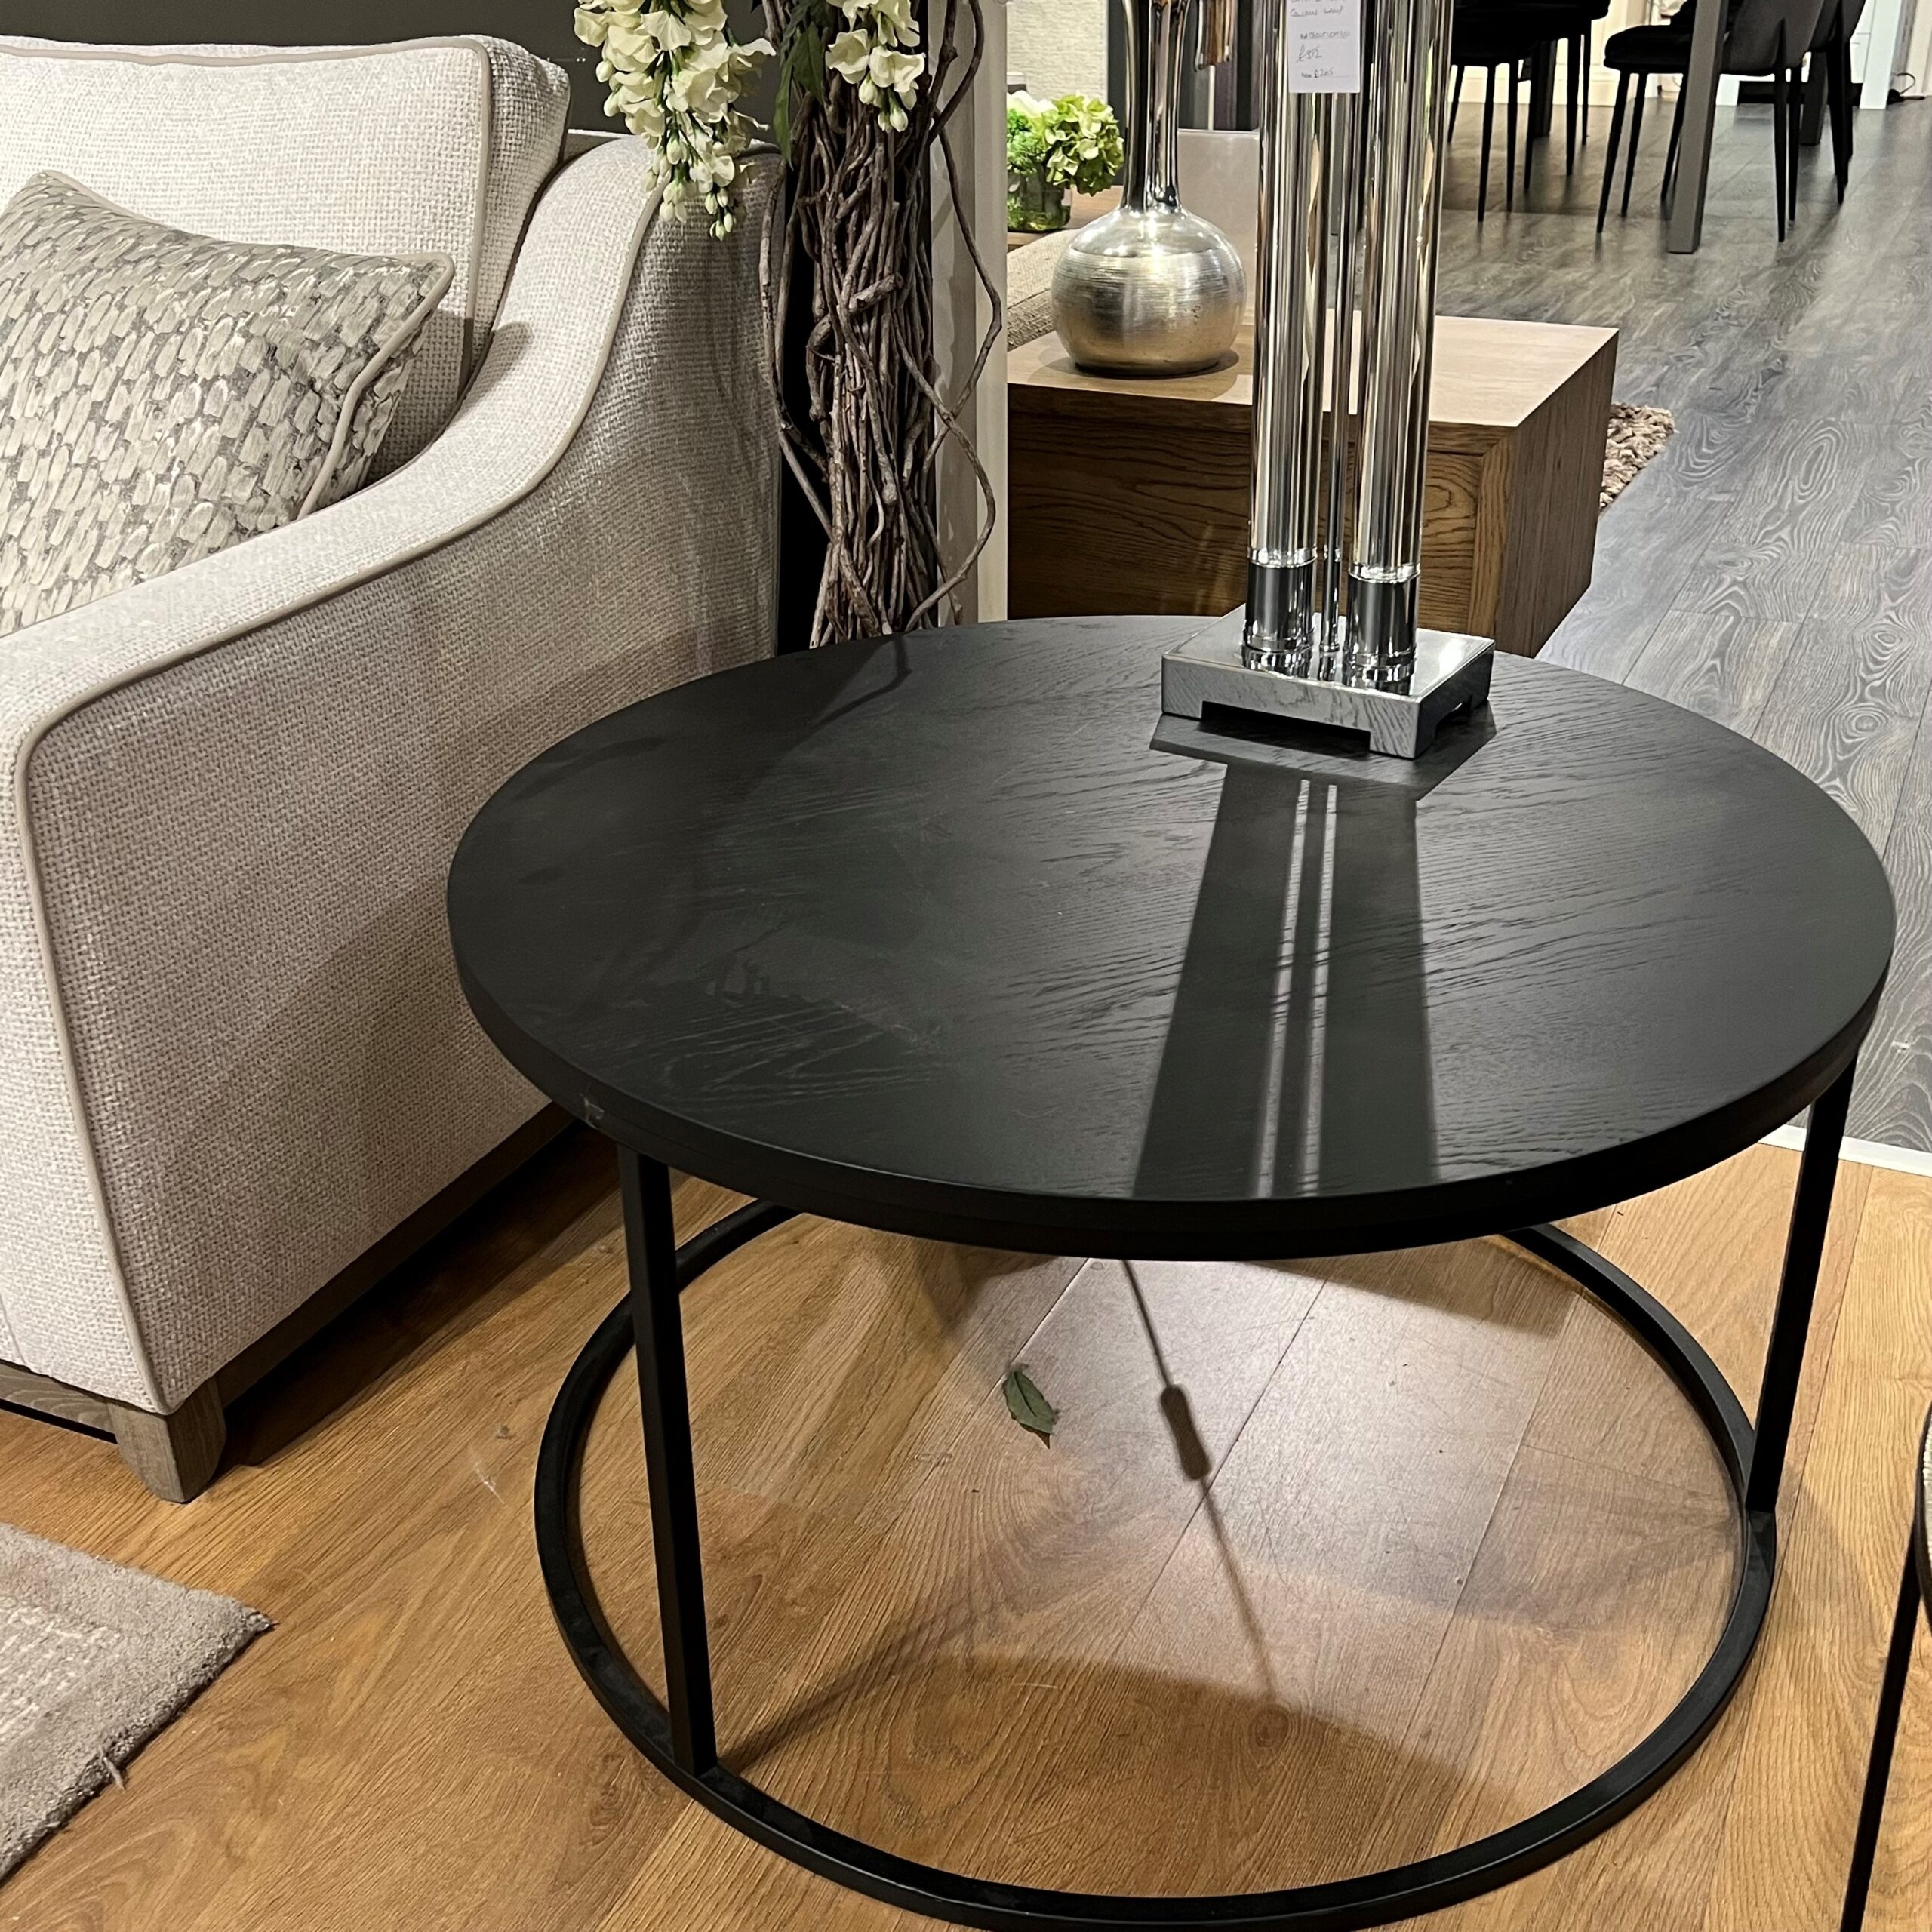 Round black oak coffee table